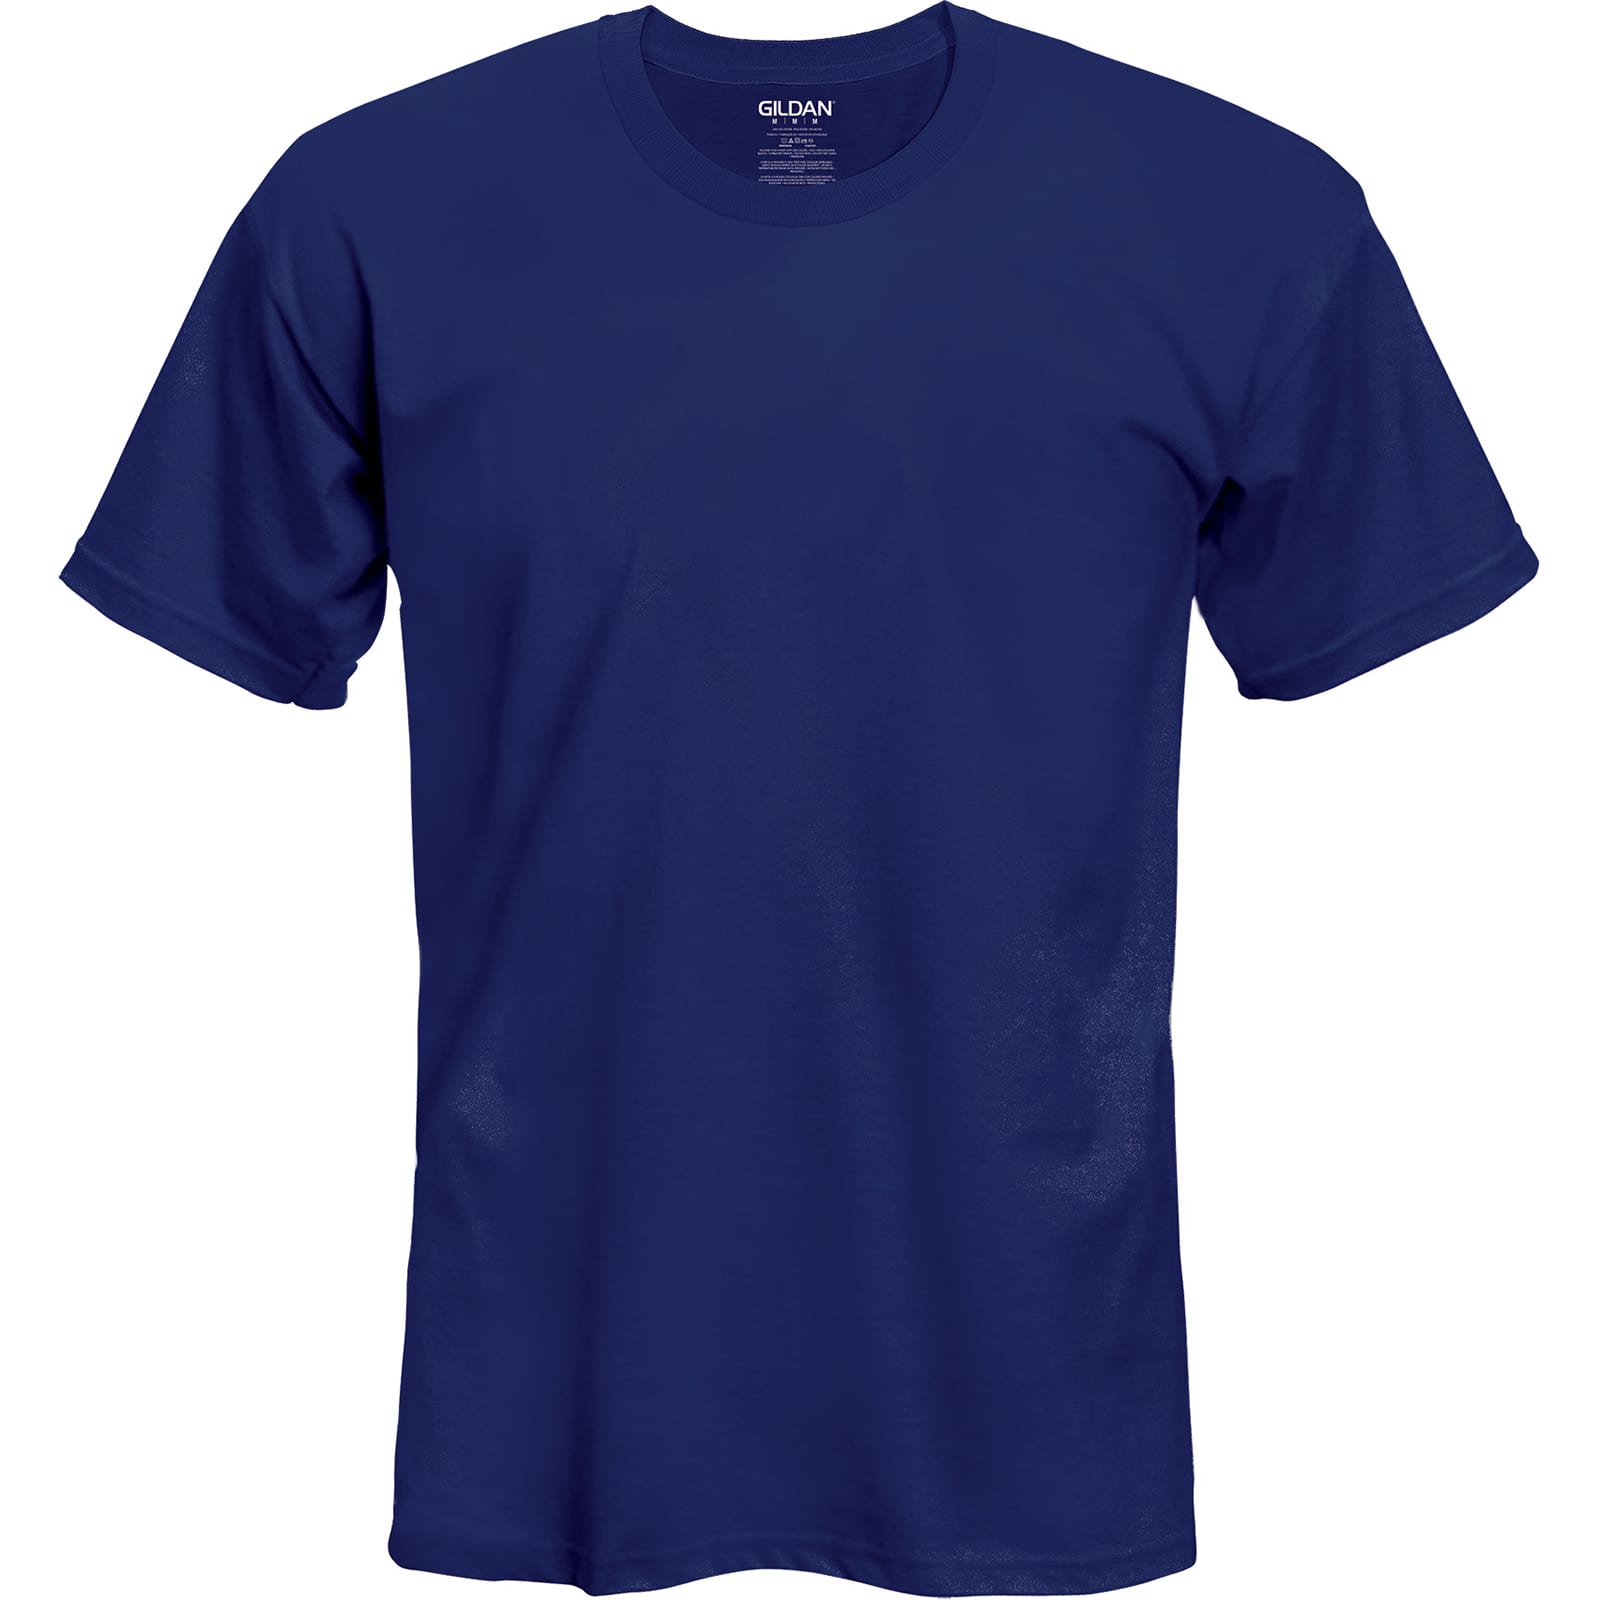 T-Shirts Sample Sale 4 Shirt Bundle Size X Small